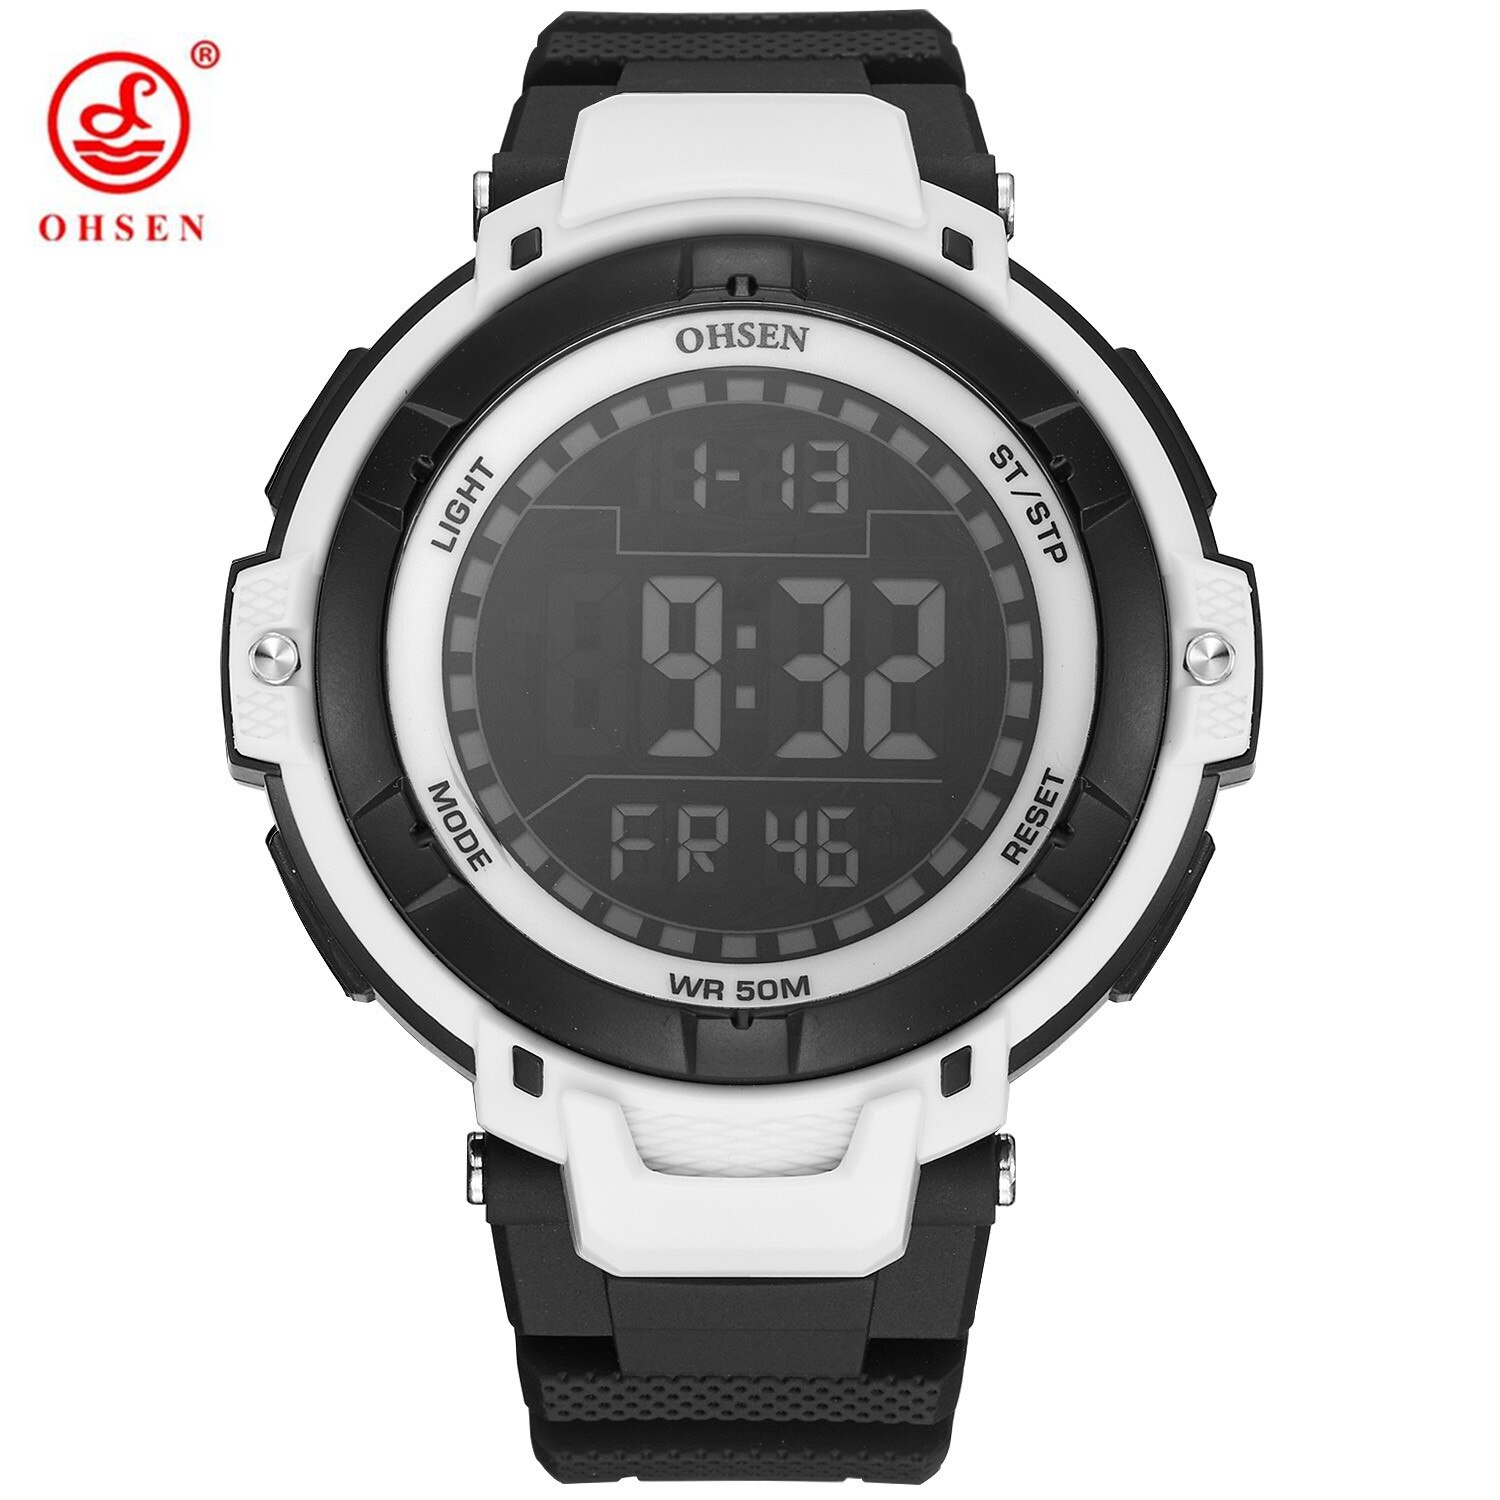 Ohsen Brand Mannen Outdoor Sport Digitale Led Horloge 50M Diver Witte Mode Mannelijke Siliconen Band Horloges Relogio Masculino